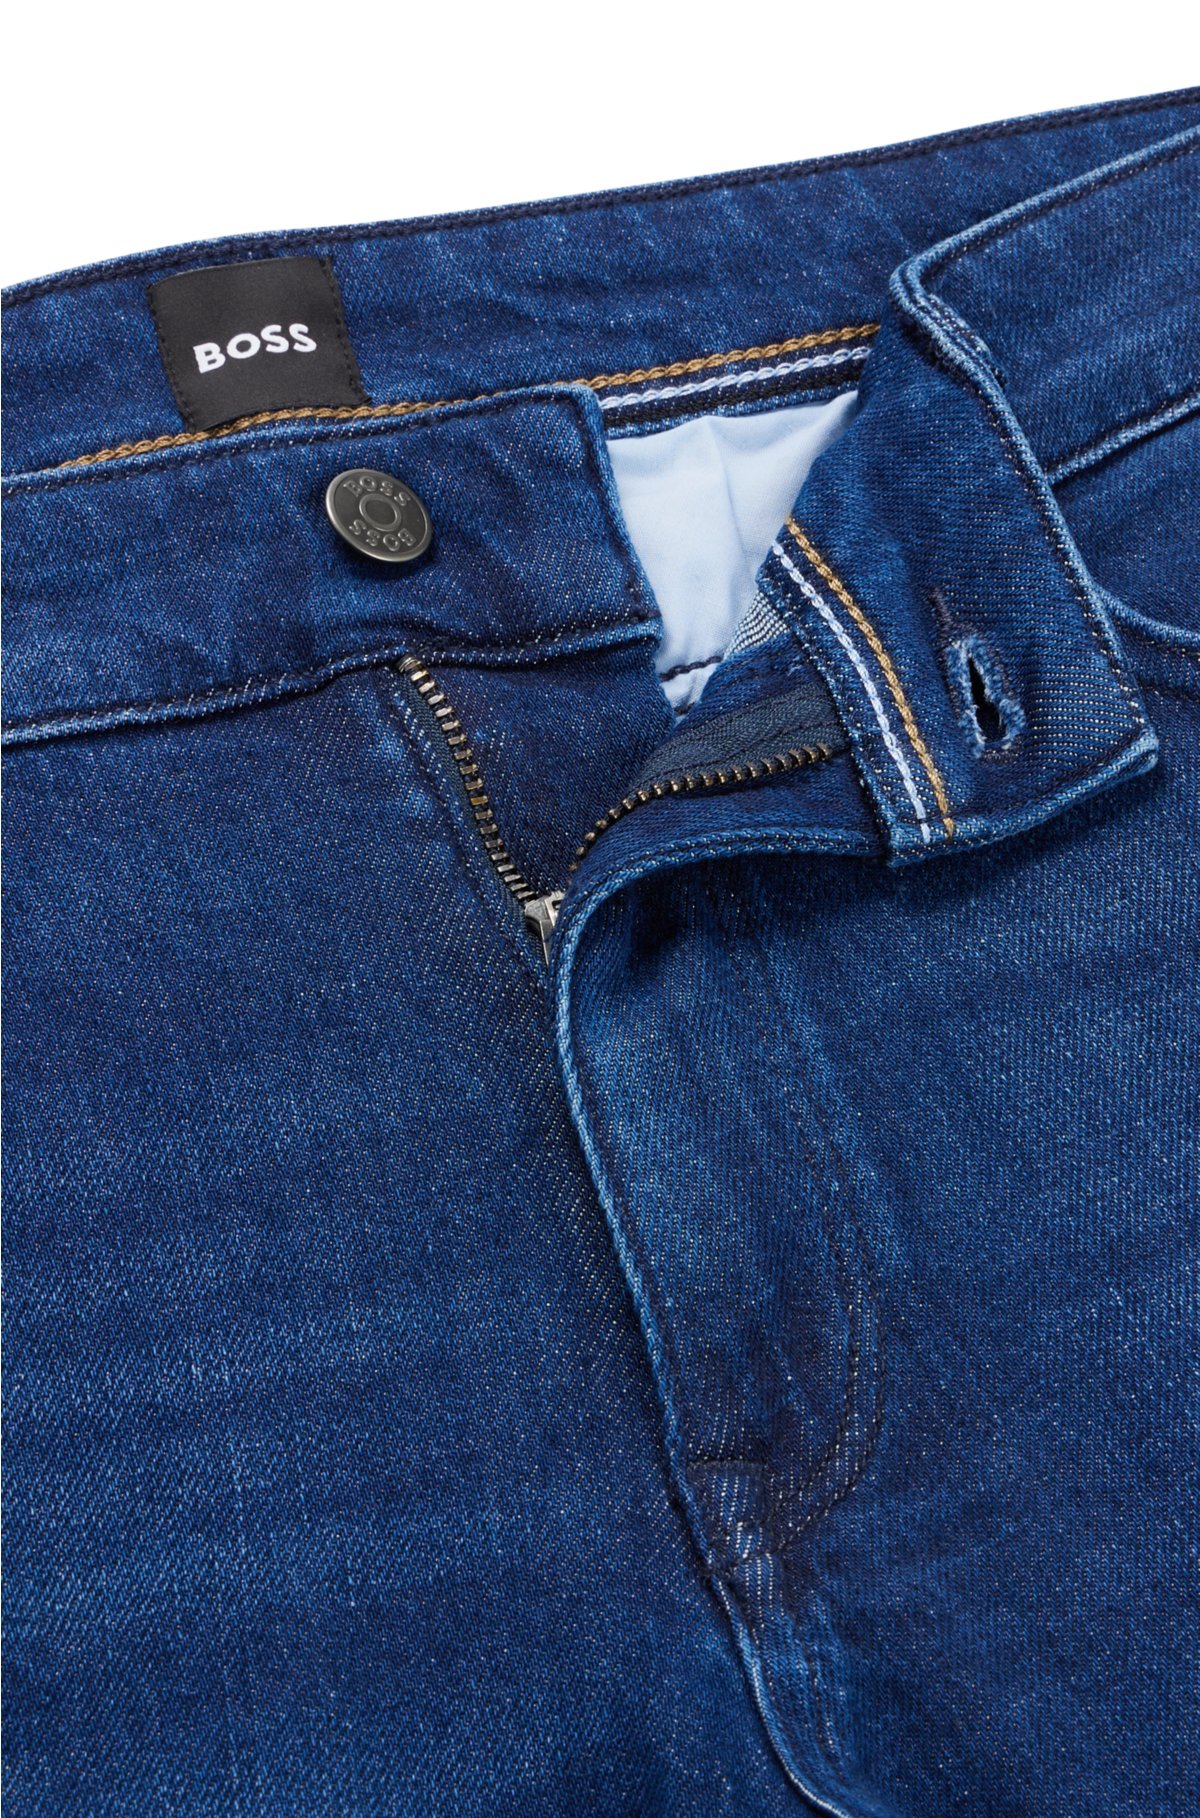 BOSS - Dunkelblaue Regular-Fit Jeans aus bequemem Stretch-Denim | Jogginganzüge